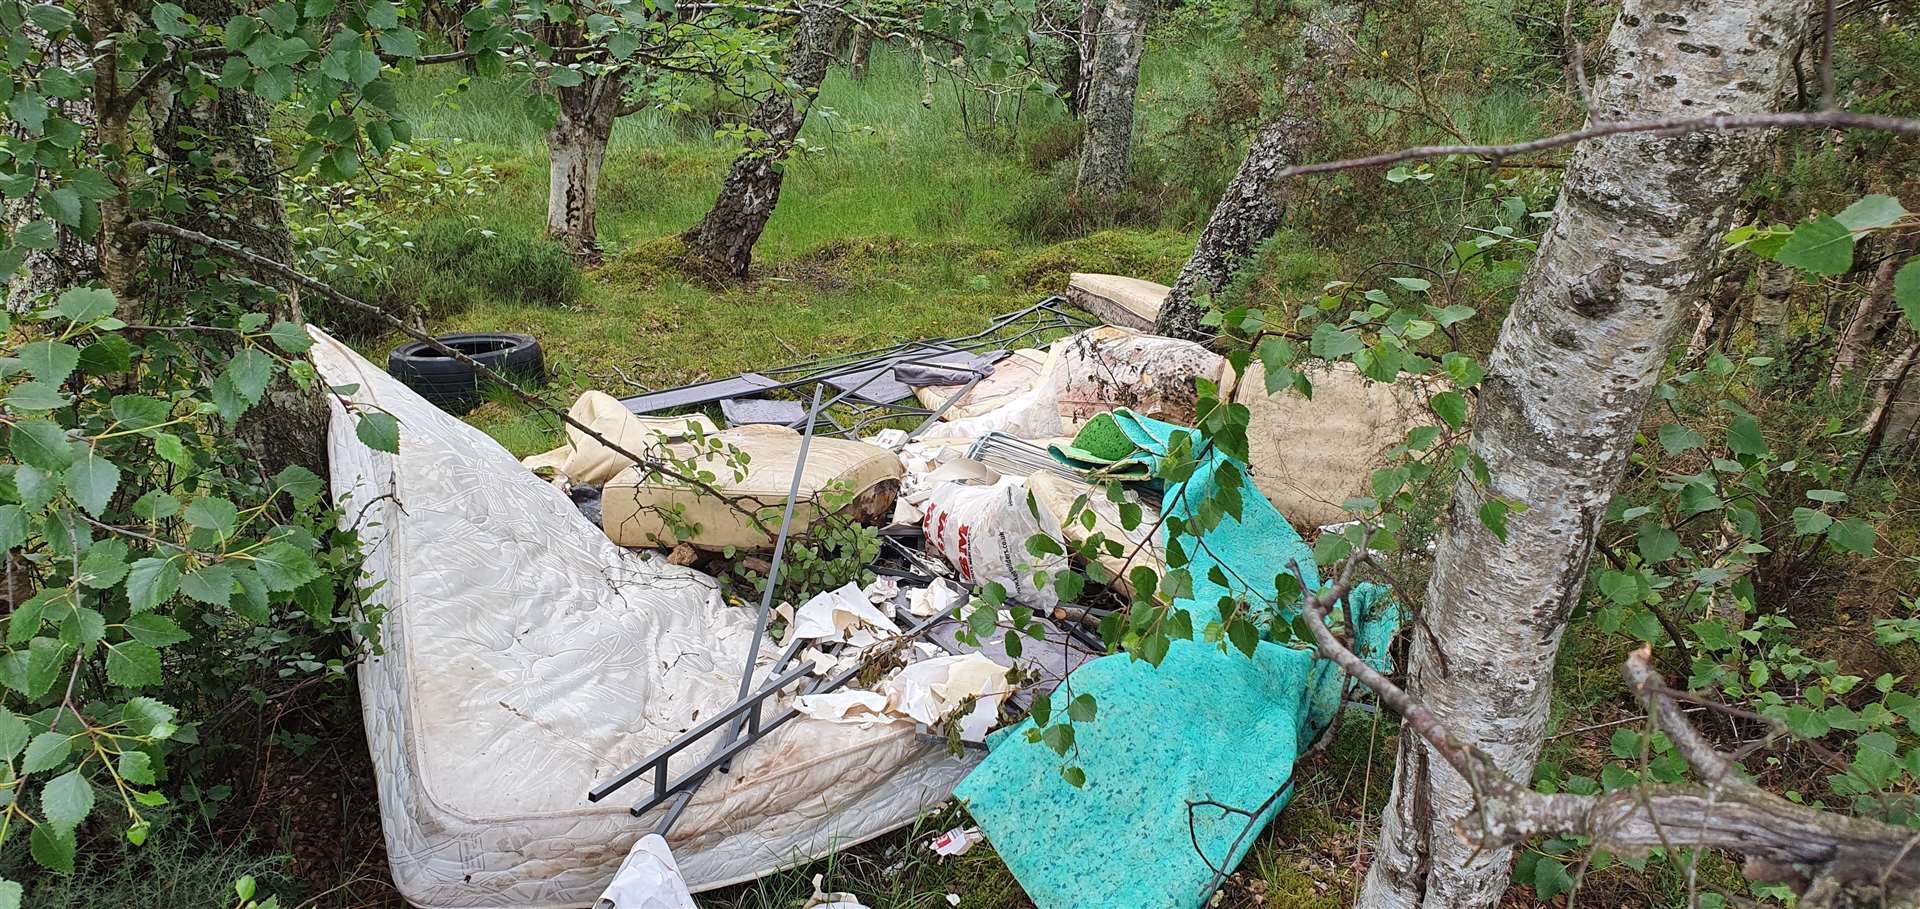 The rubbish dumped near Fogwatt included mattresses and mangled metal.